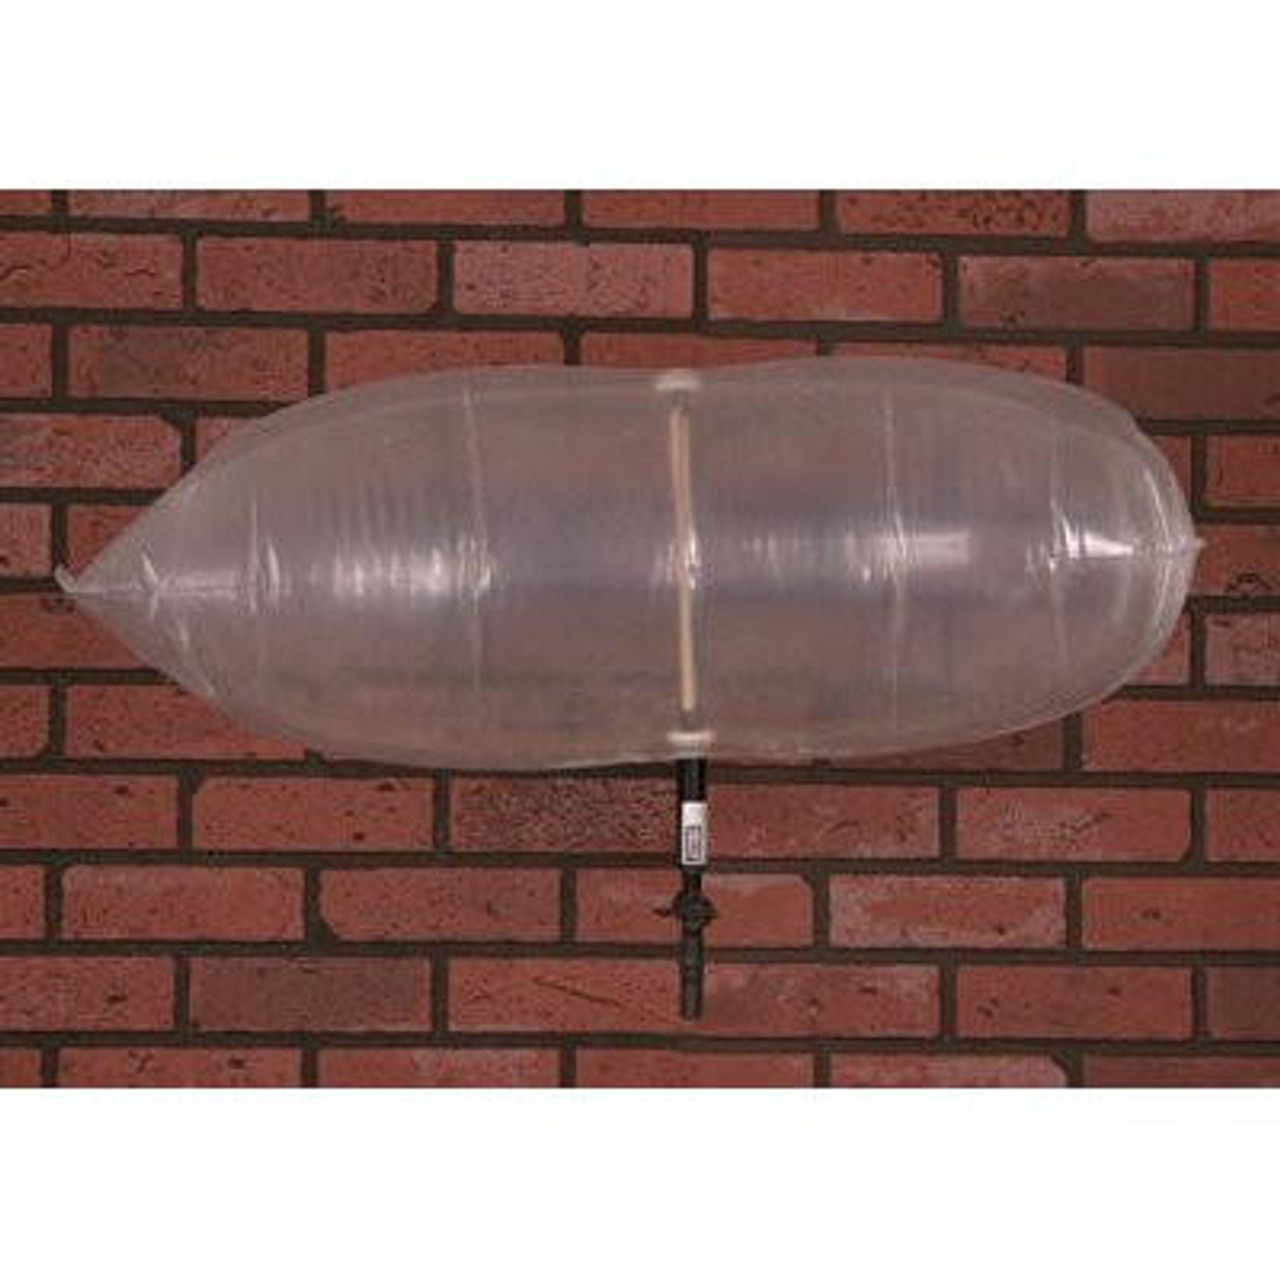 Chimney Balloon® 24x9 Inflatable Fireplace Draft Blocker (24x9 Chimney  Pillow®)